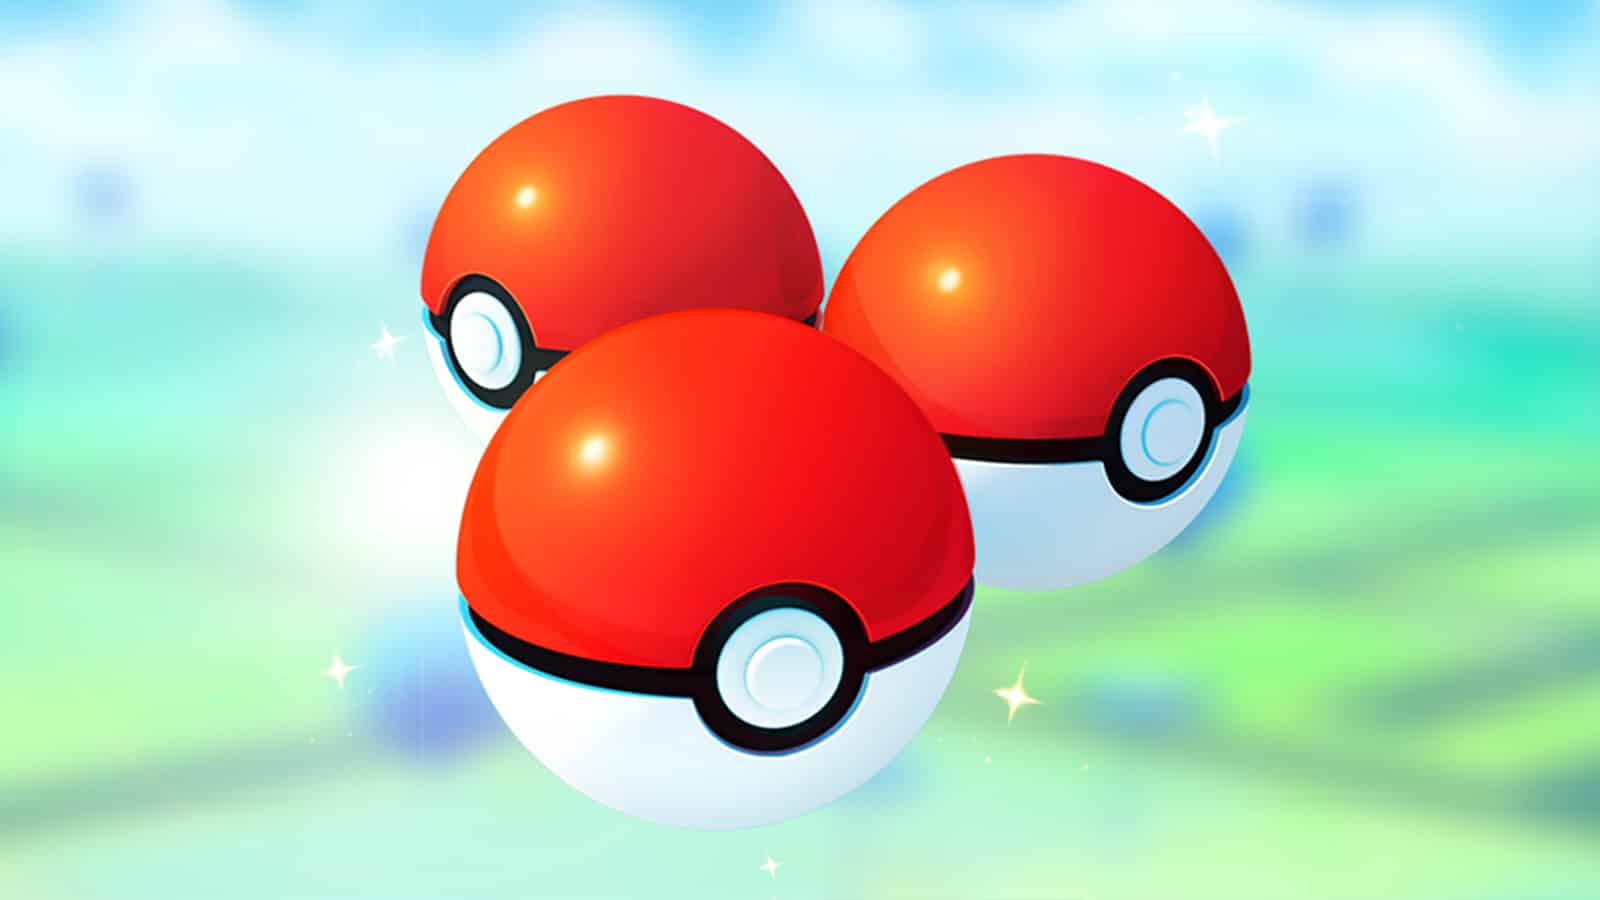 3 Poke Balls from Pokemon Go